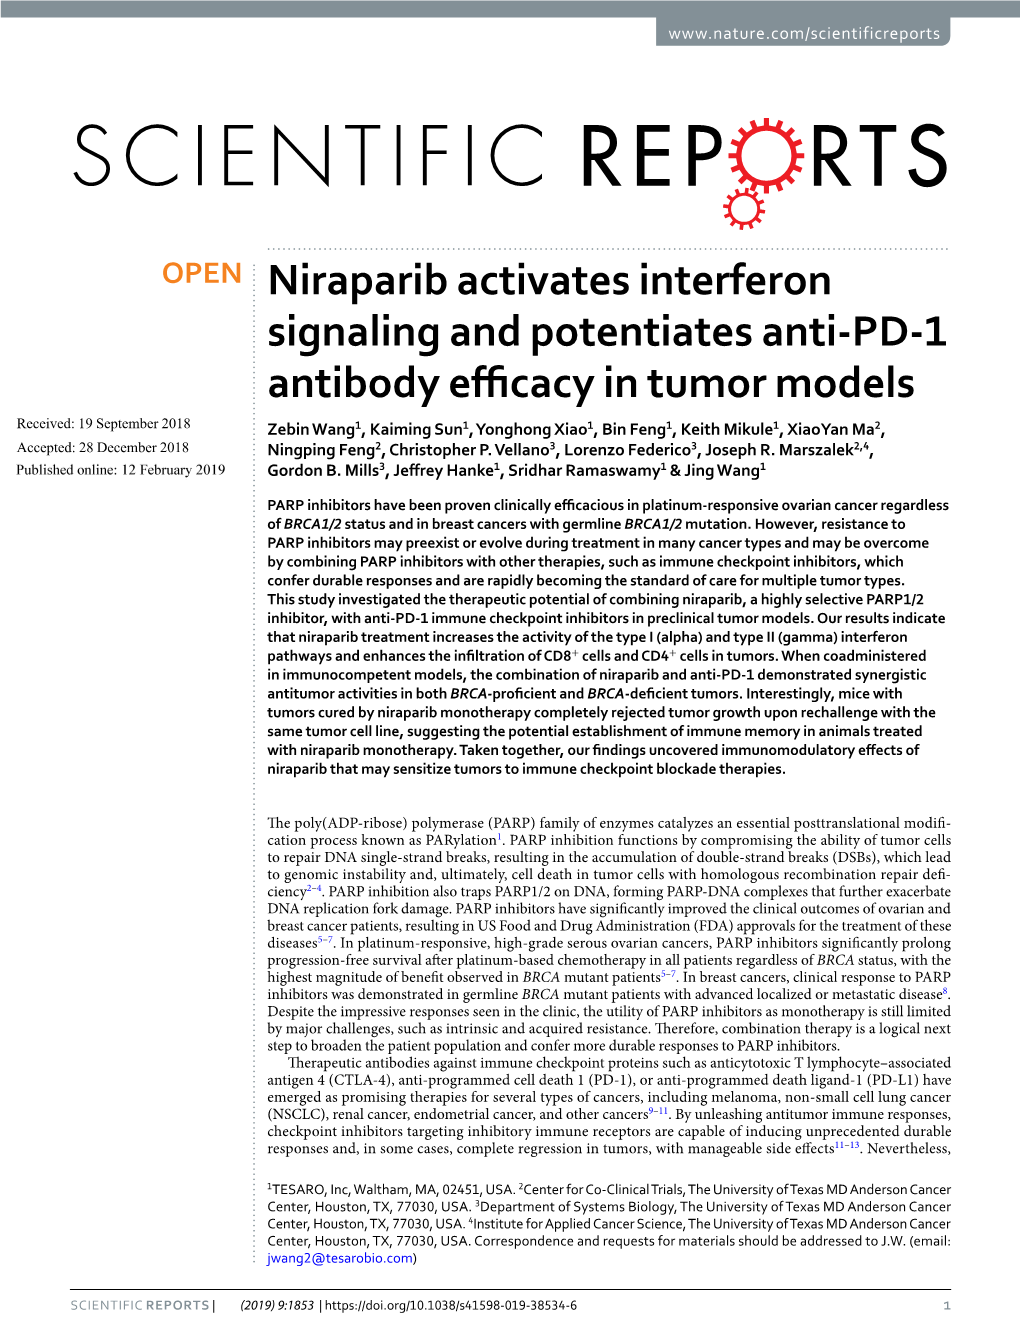 Niraparib Activates Interferon Signaling and Potentiates Anti-PD-1